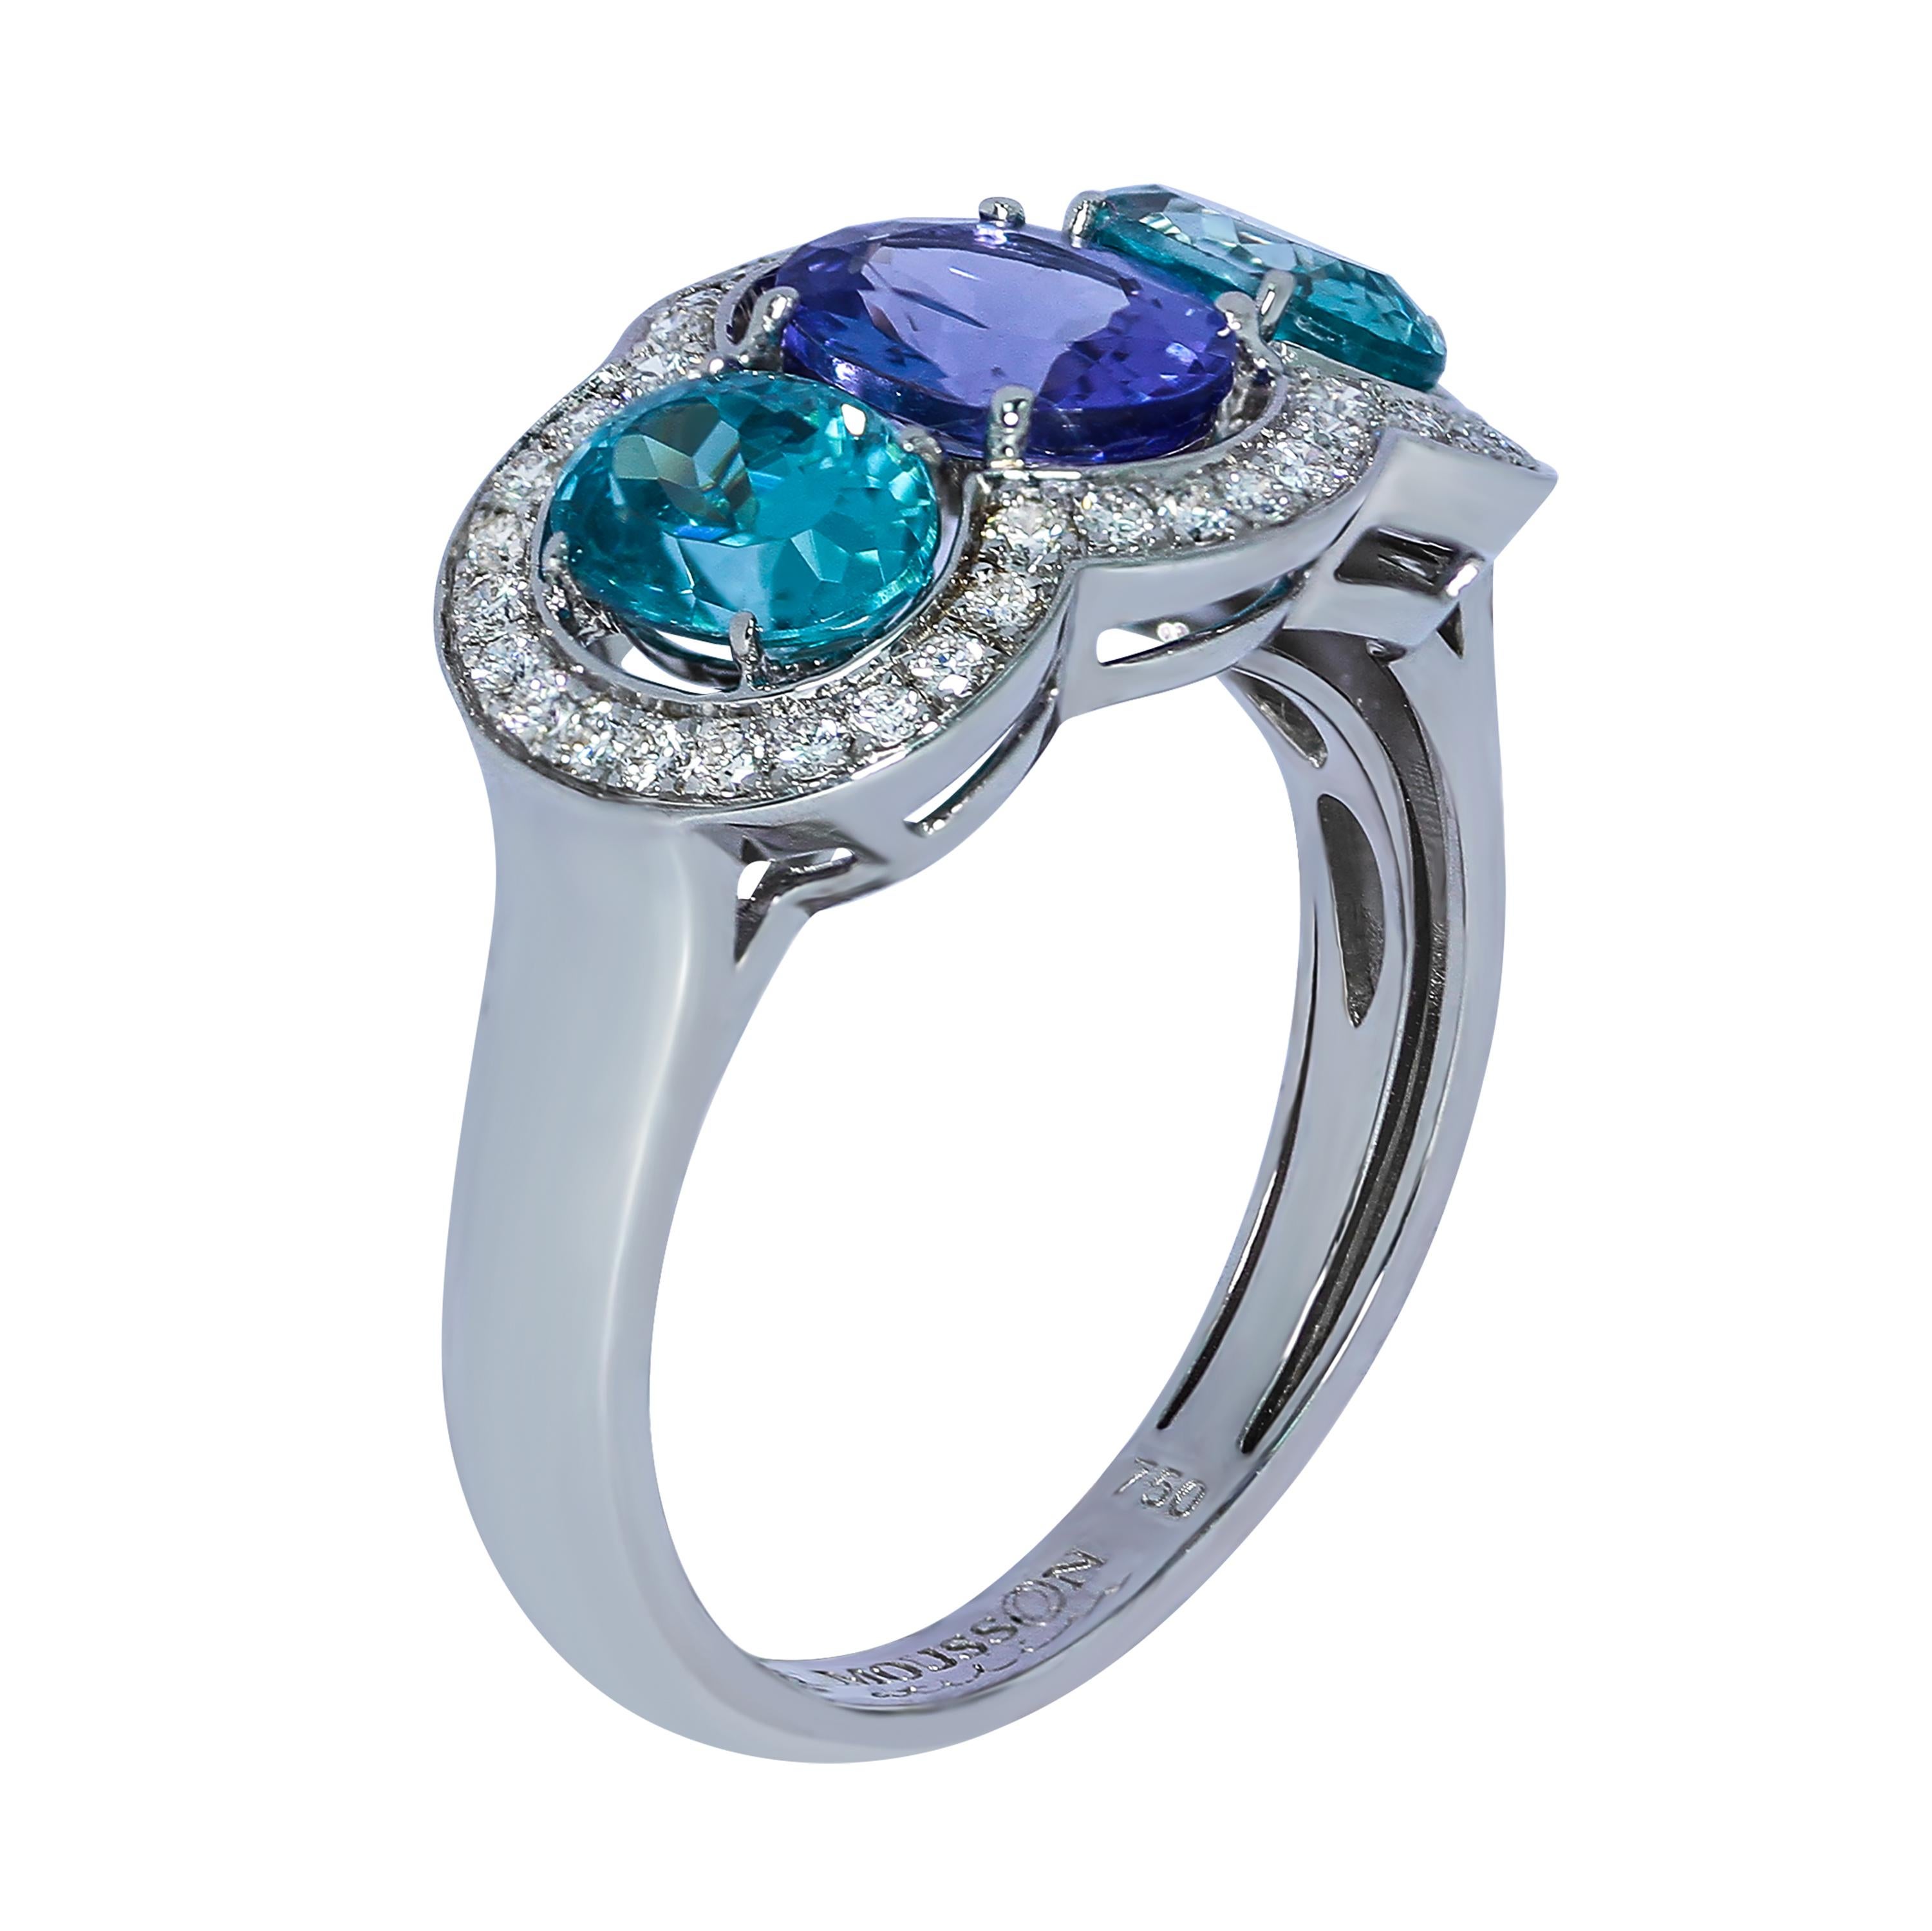 Tanzanite Zircon Diamond 18 Karat White Gold Ring
Radiantly sparkling Ring from our 